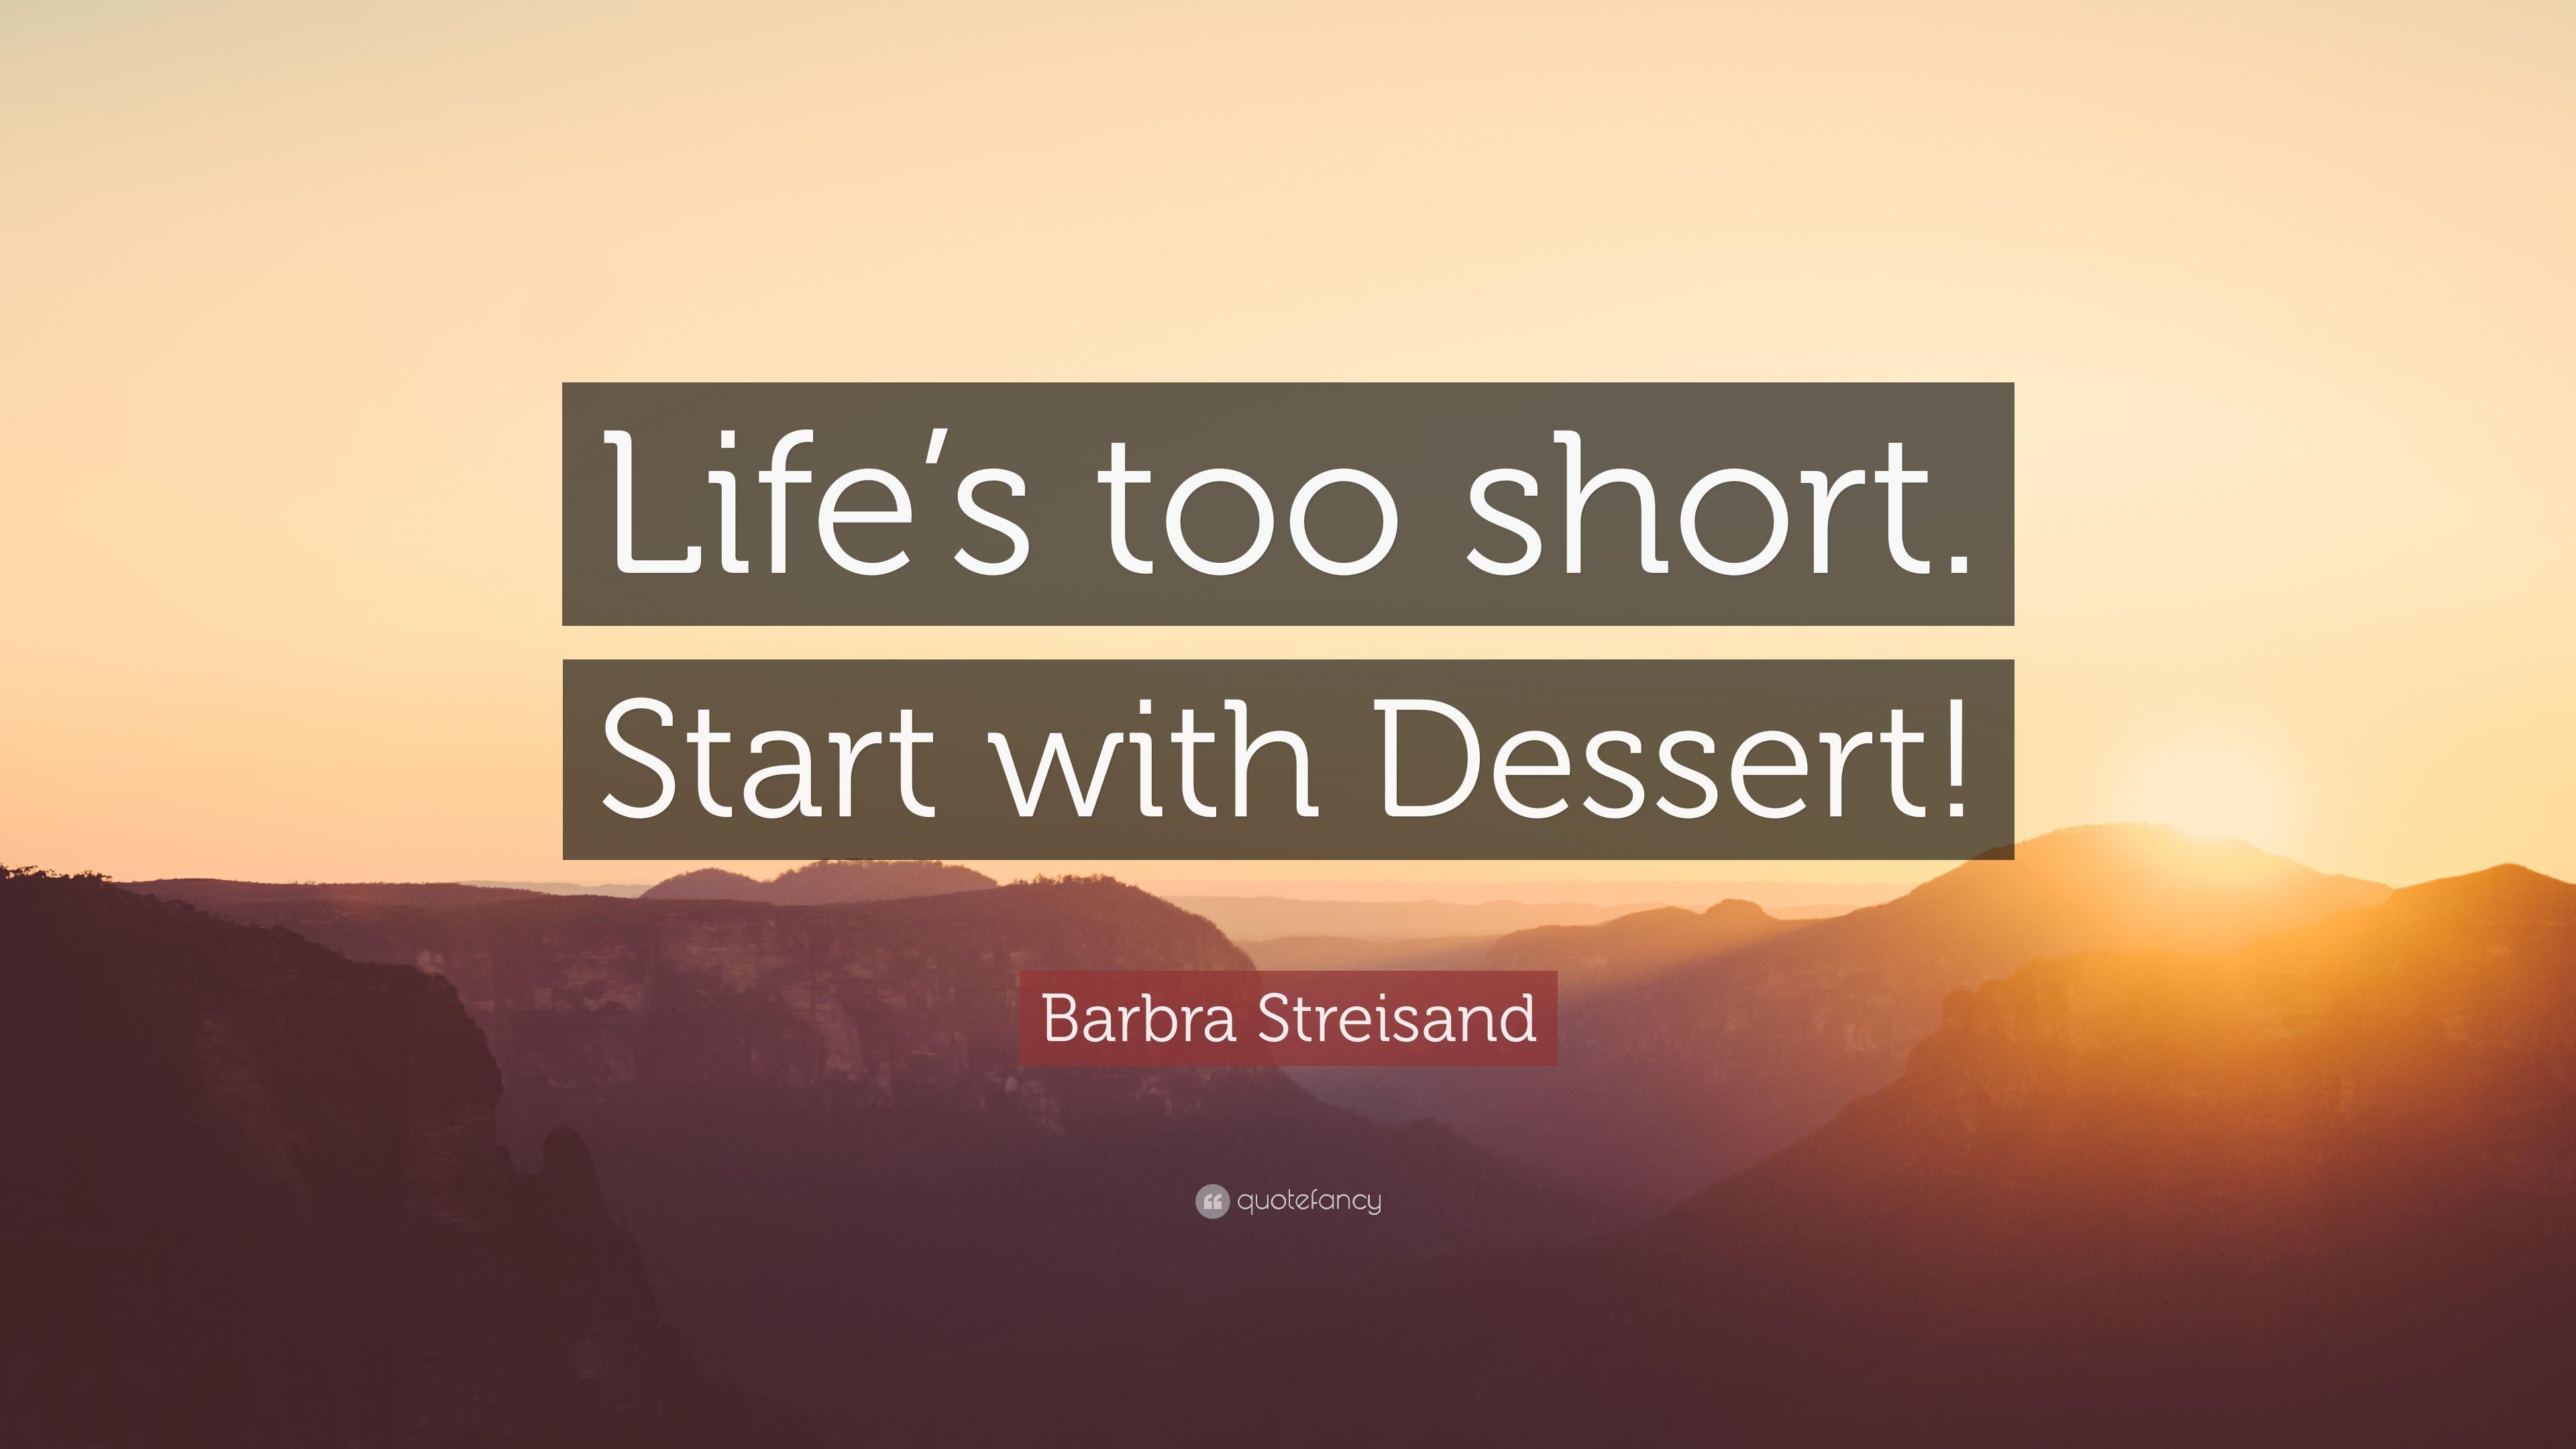 Barbra Streisand Quote: “Life's too short. Start with Dessert!” 7